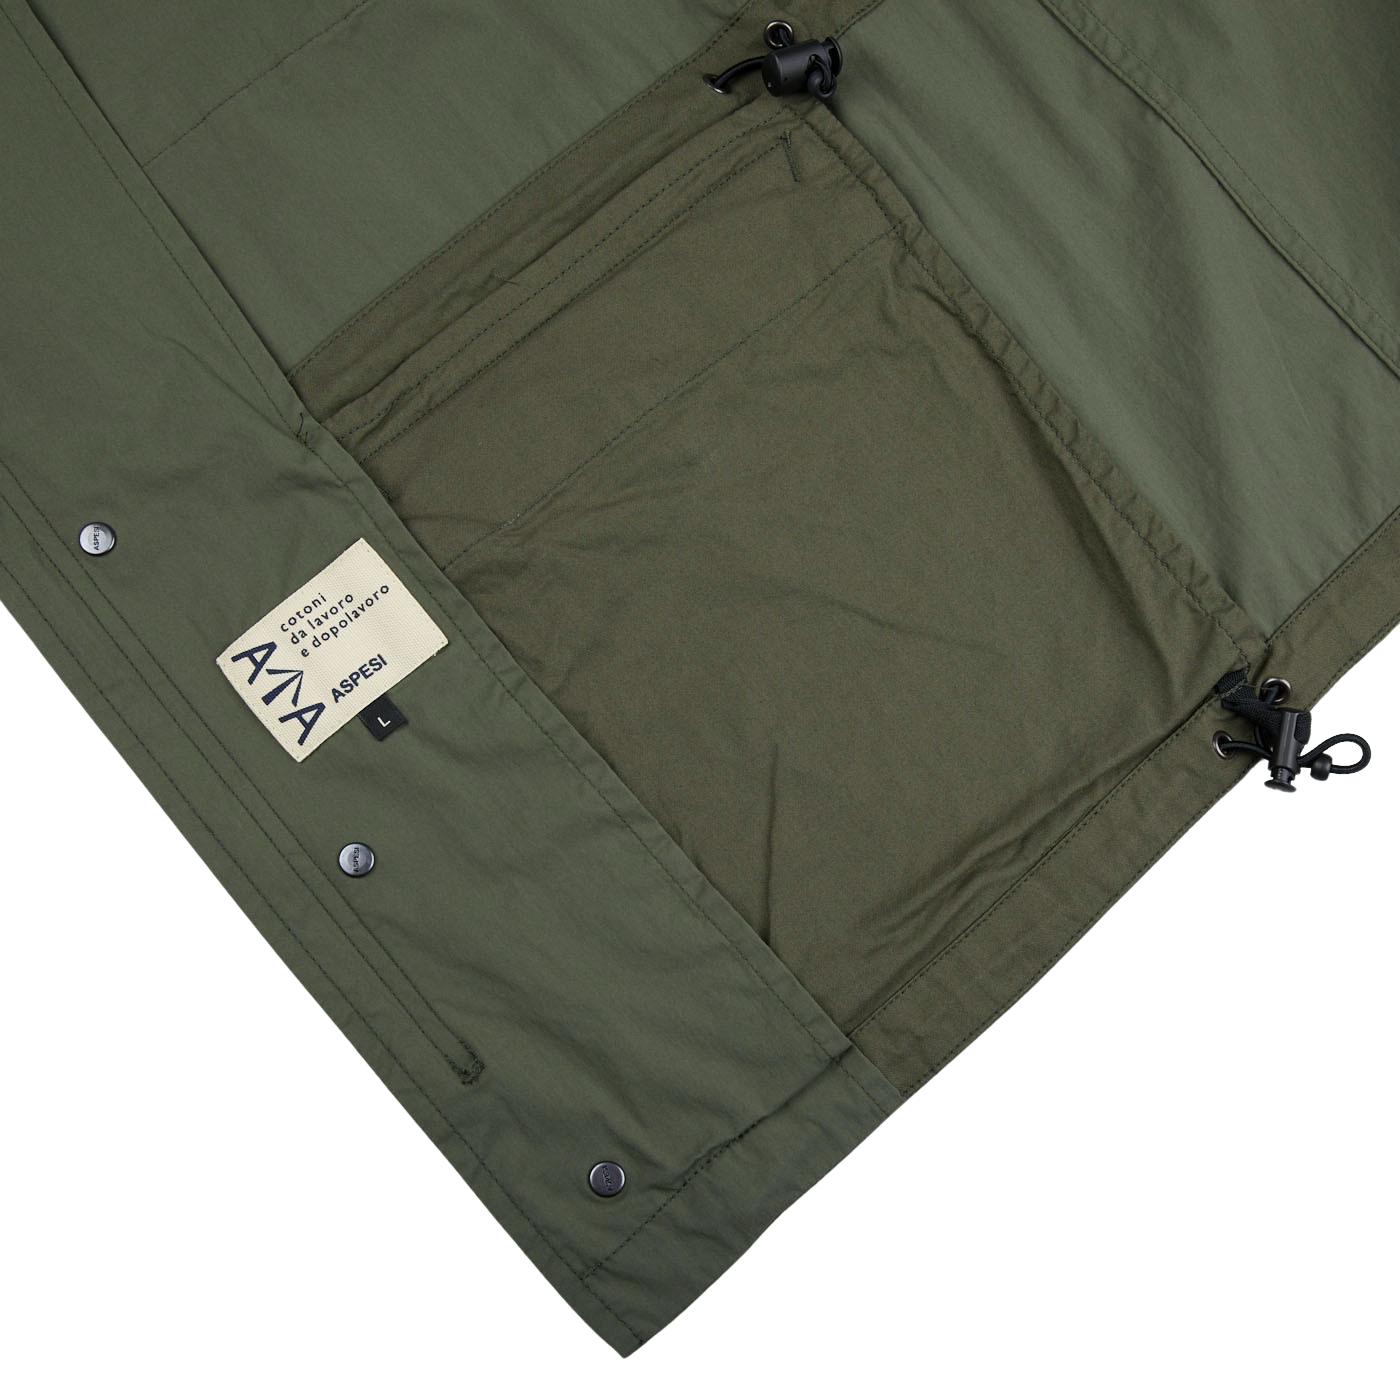 An Aspesi Green Cotton Nylon M65 Field Jacket with a zippered pocket.